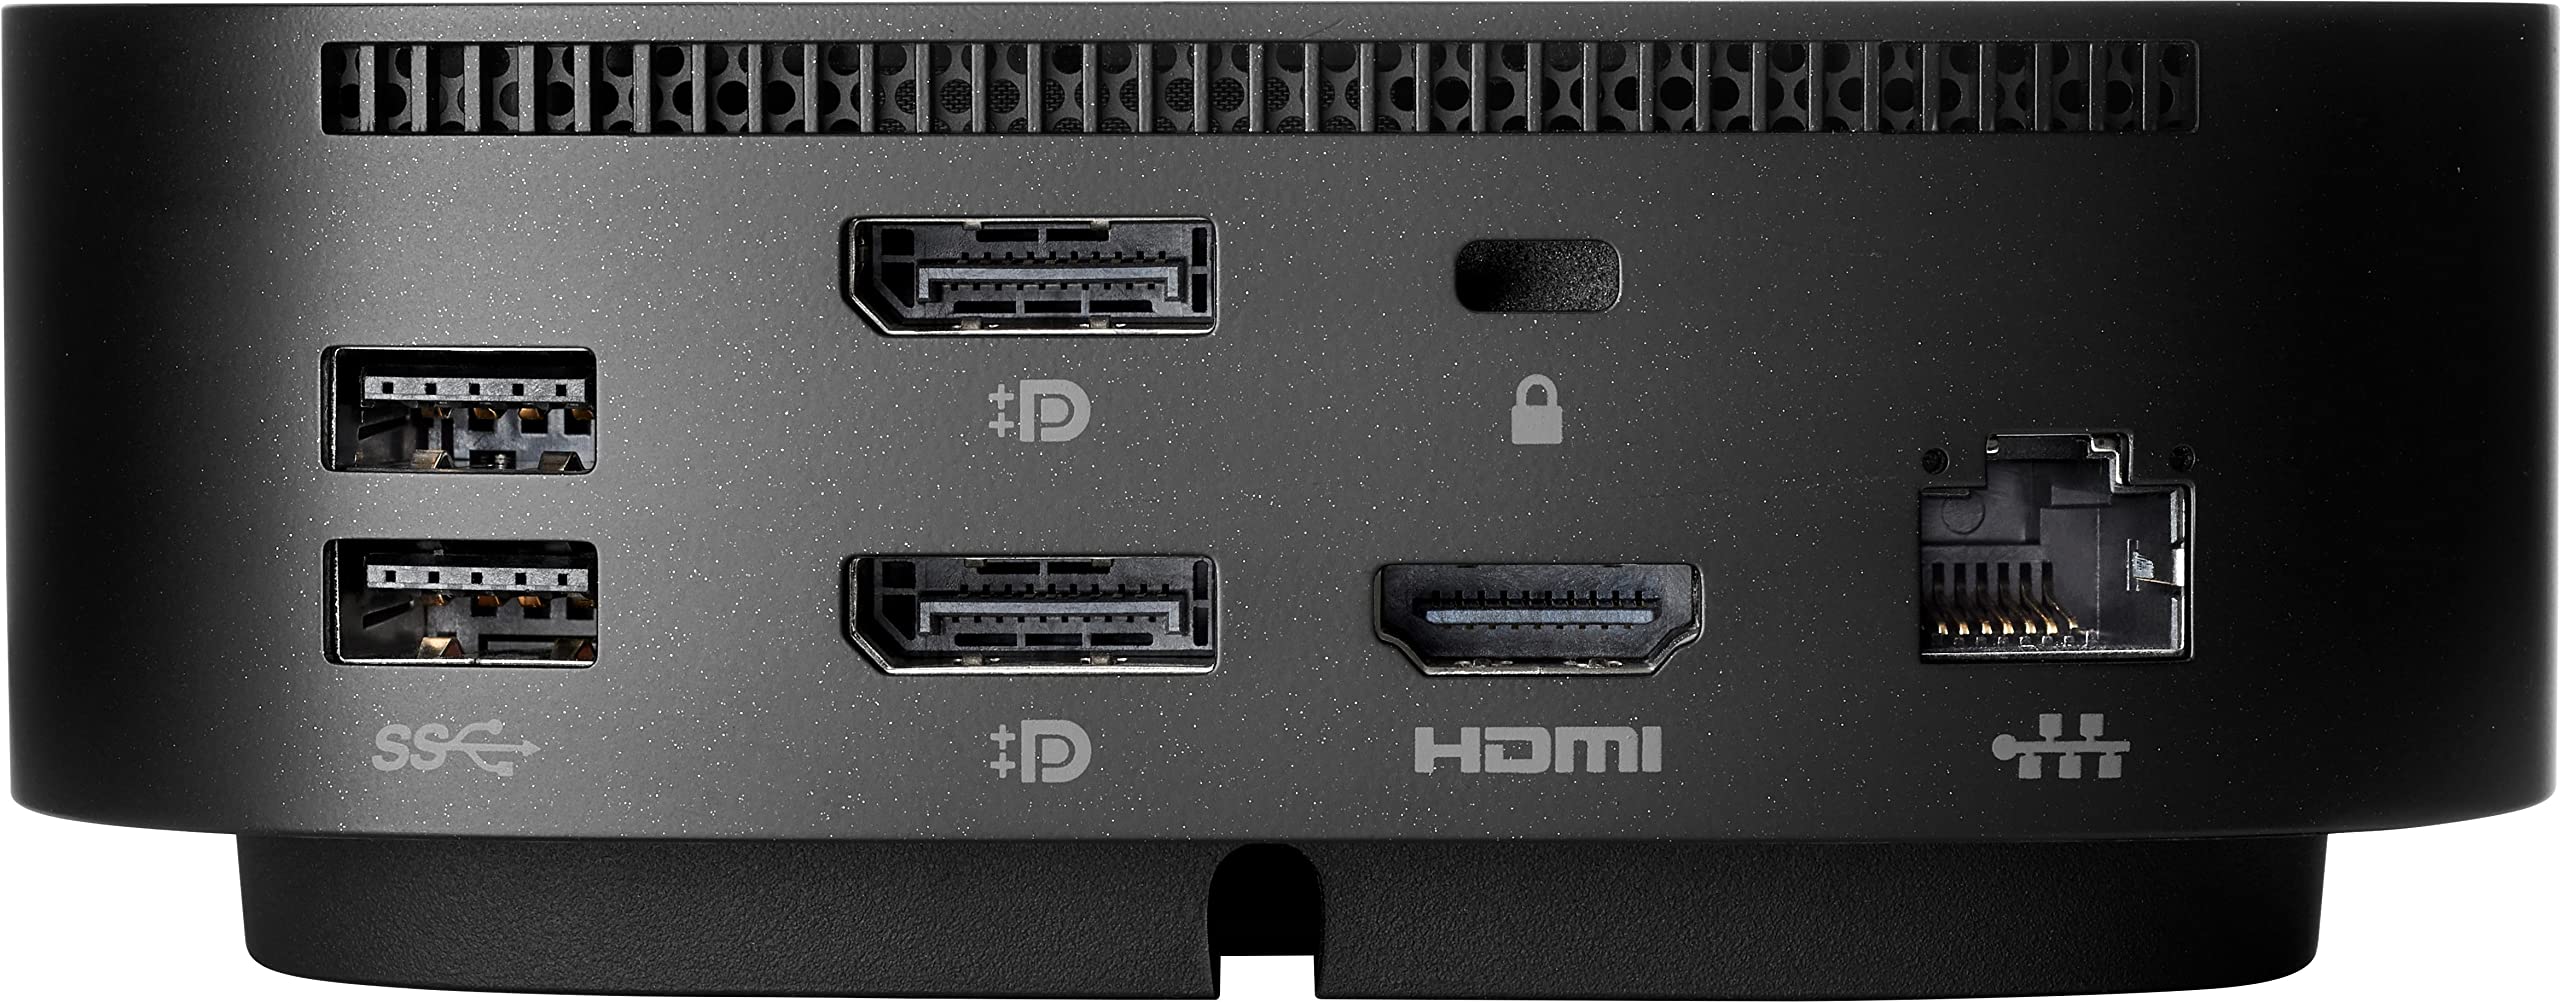 HP USB-C/A Universal Dock G2 120W (5TW13AA#ABB) (Renewed)